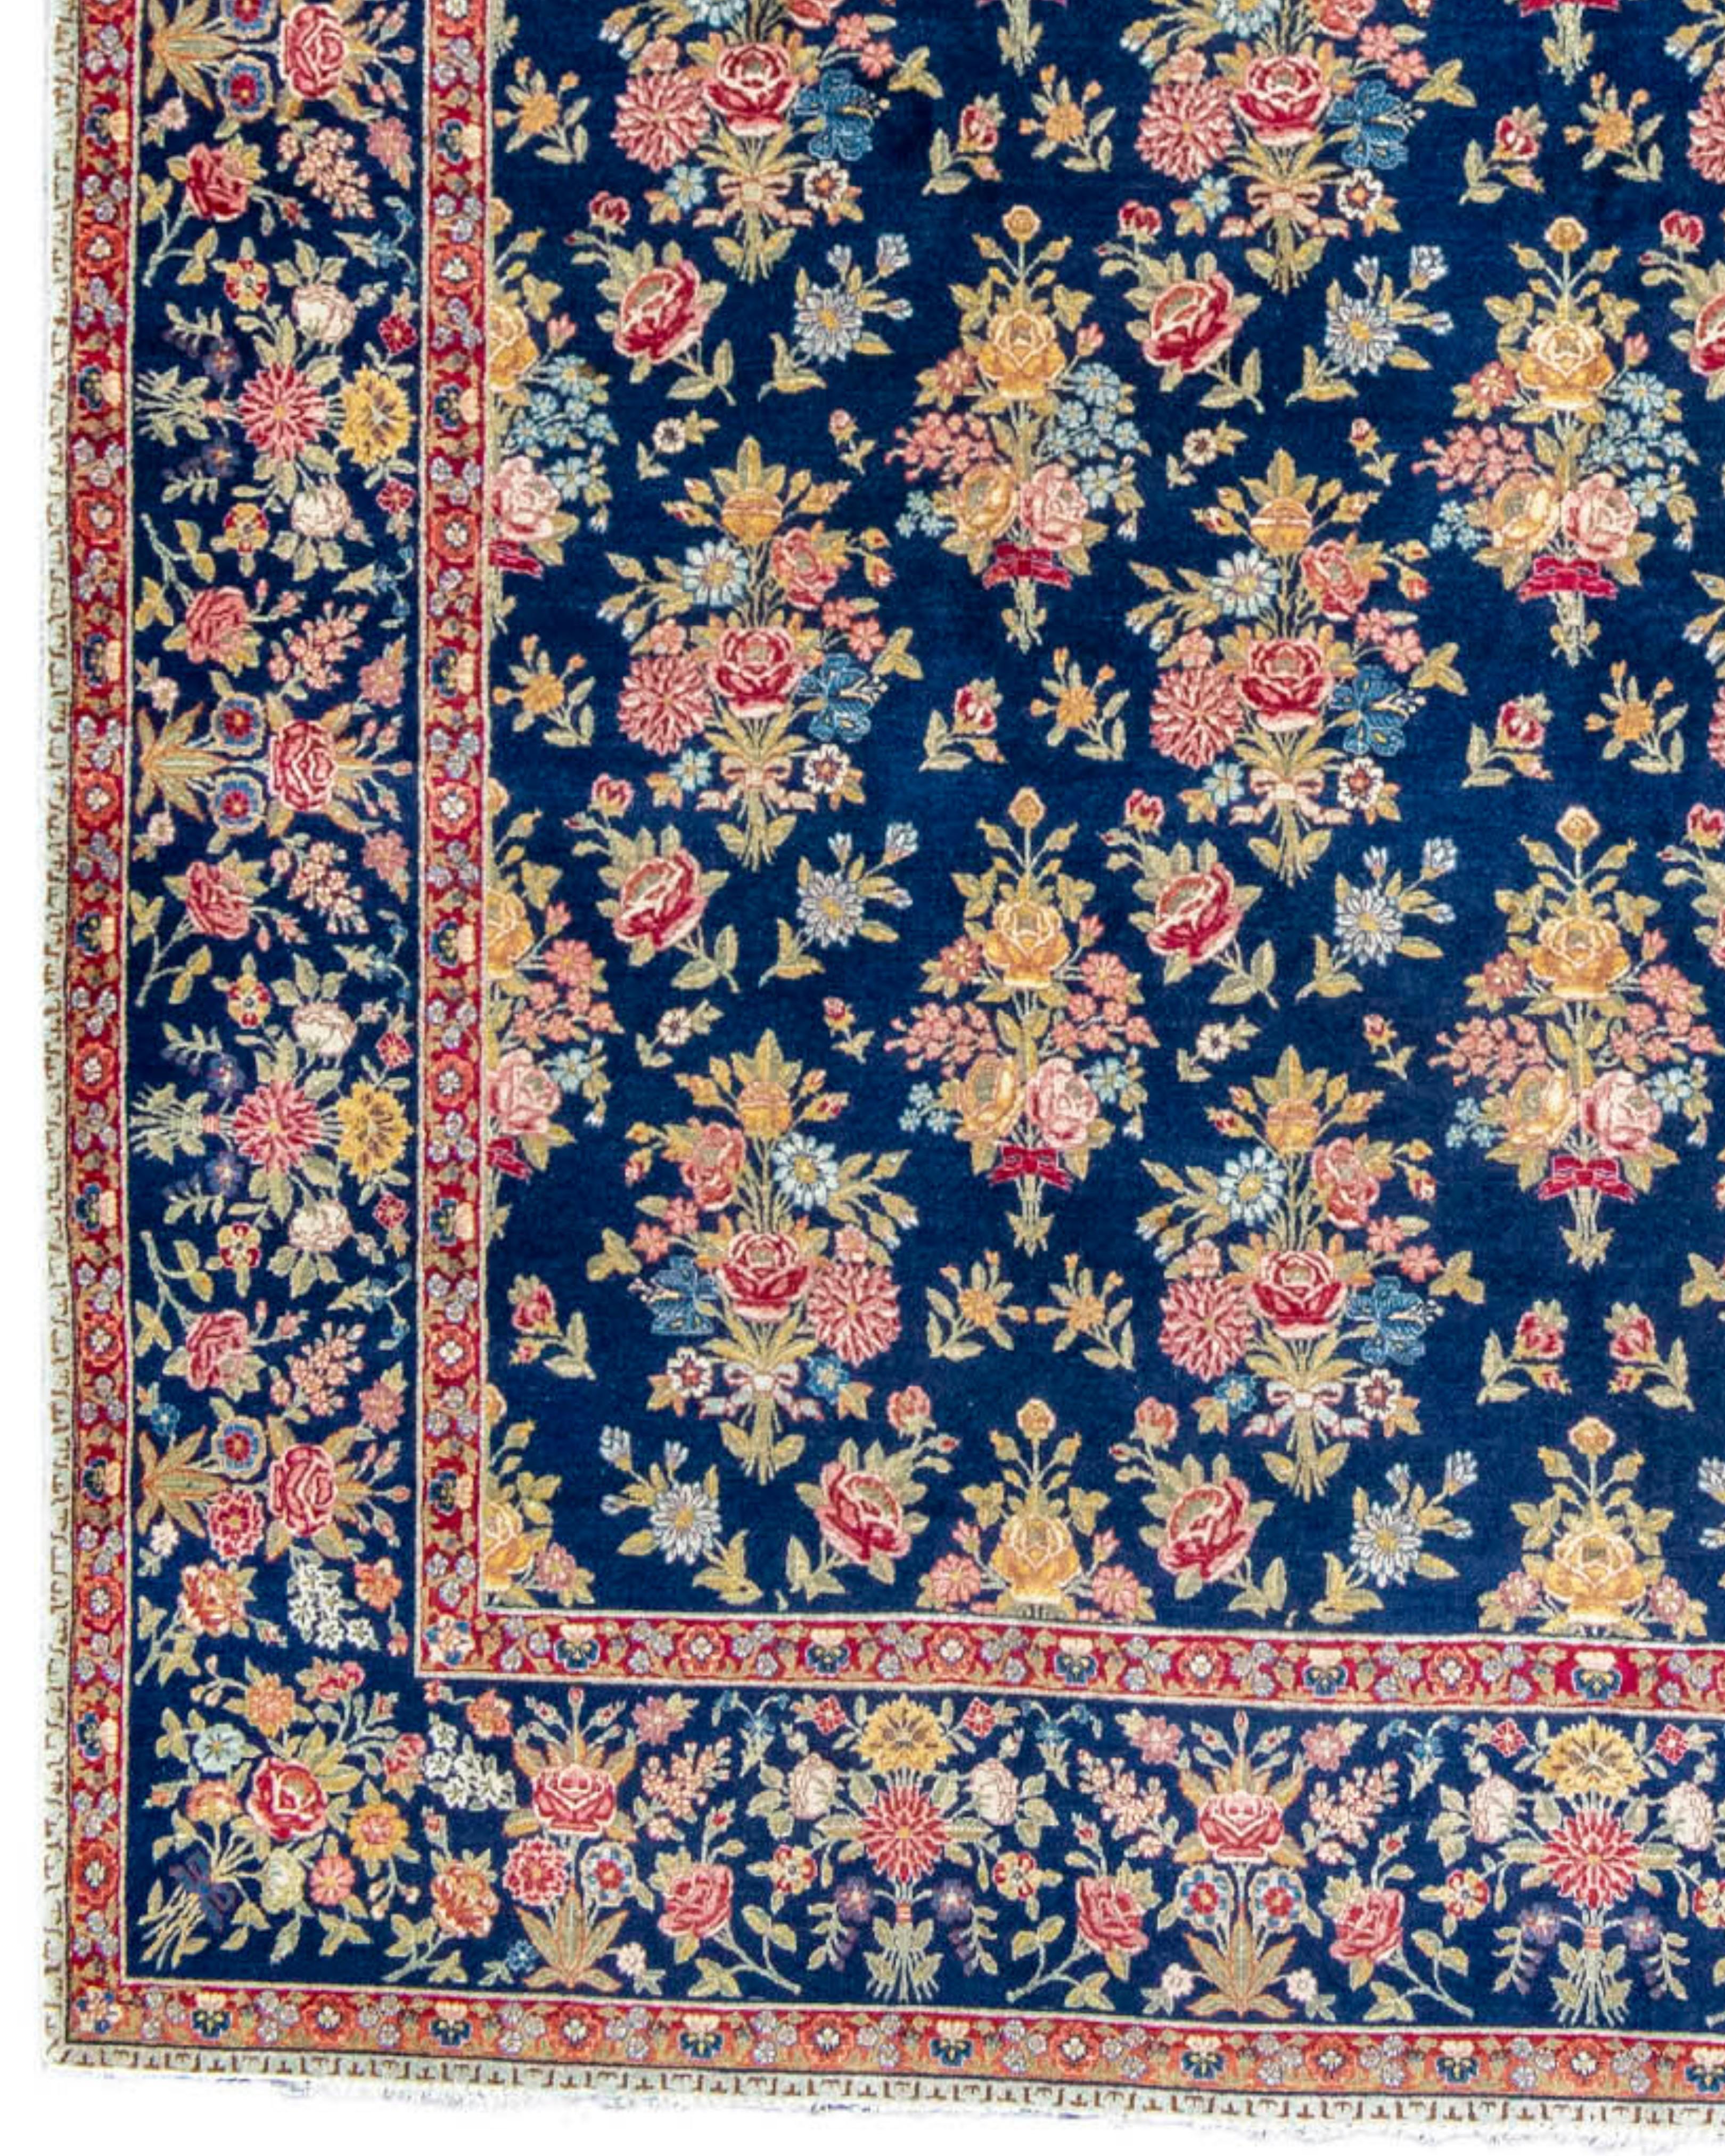 Hand-Knotted Antique Persian Floral Tabriz Carpet, c. 1900 For Sale